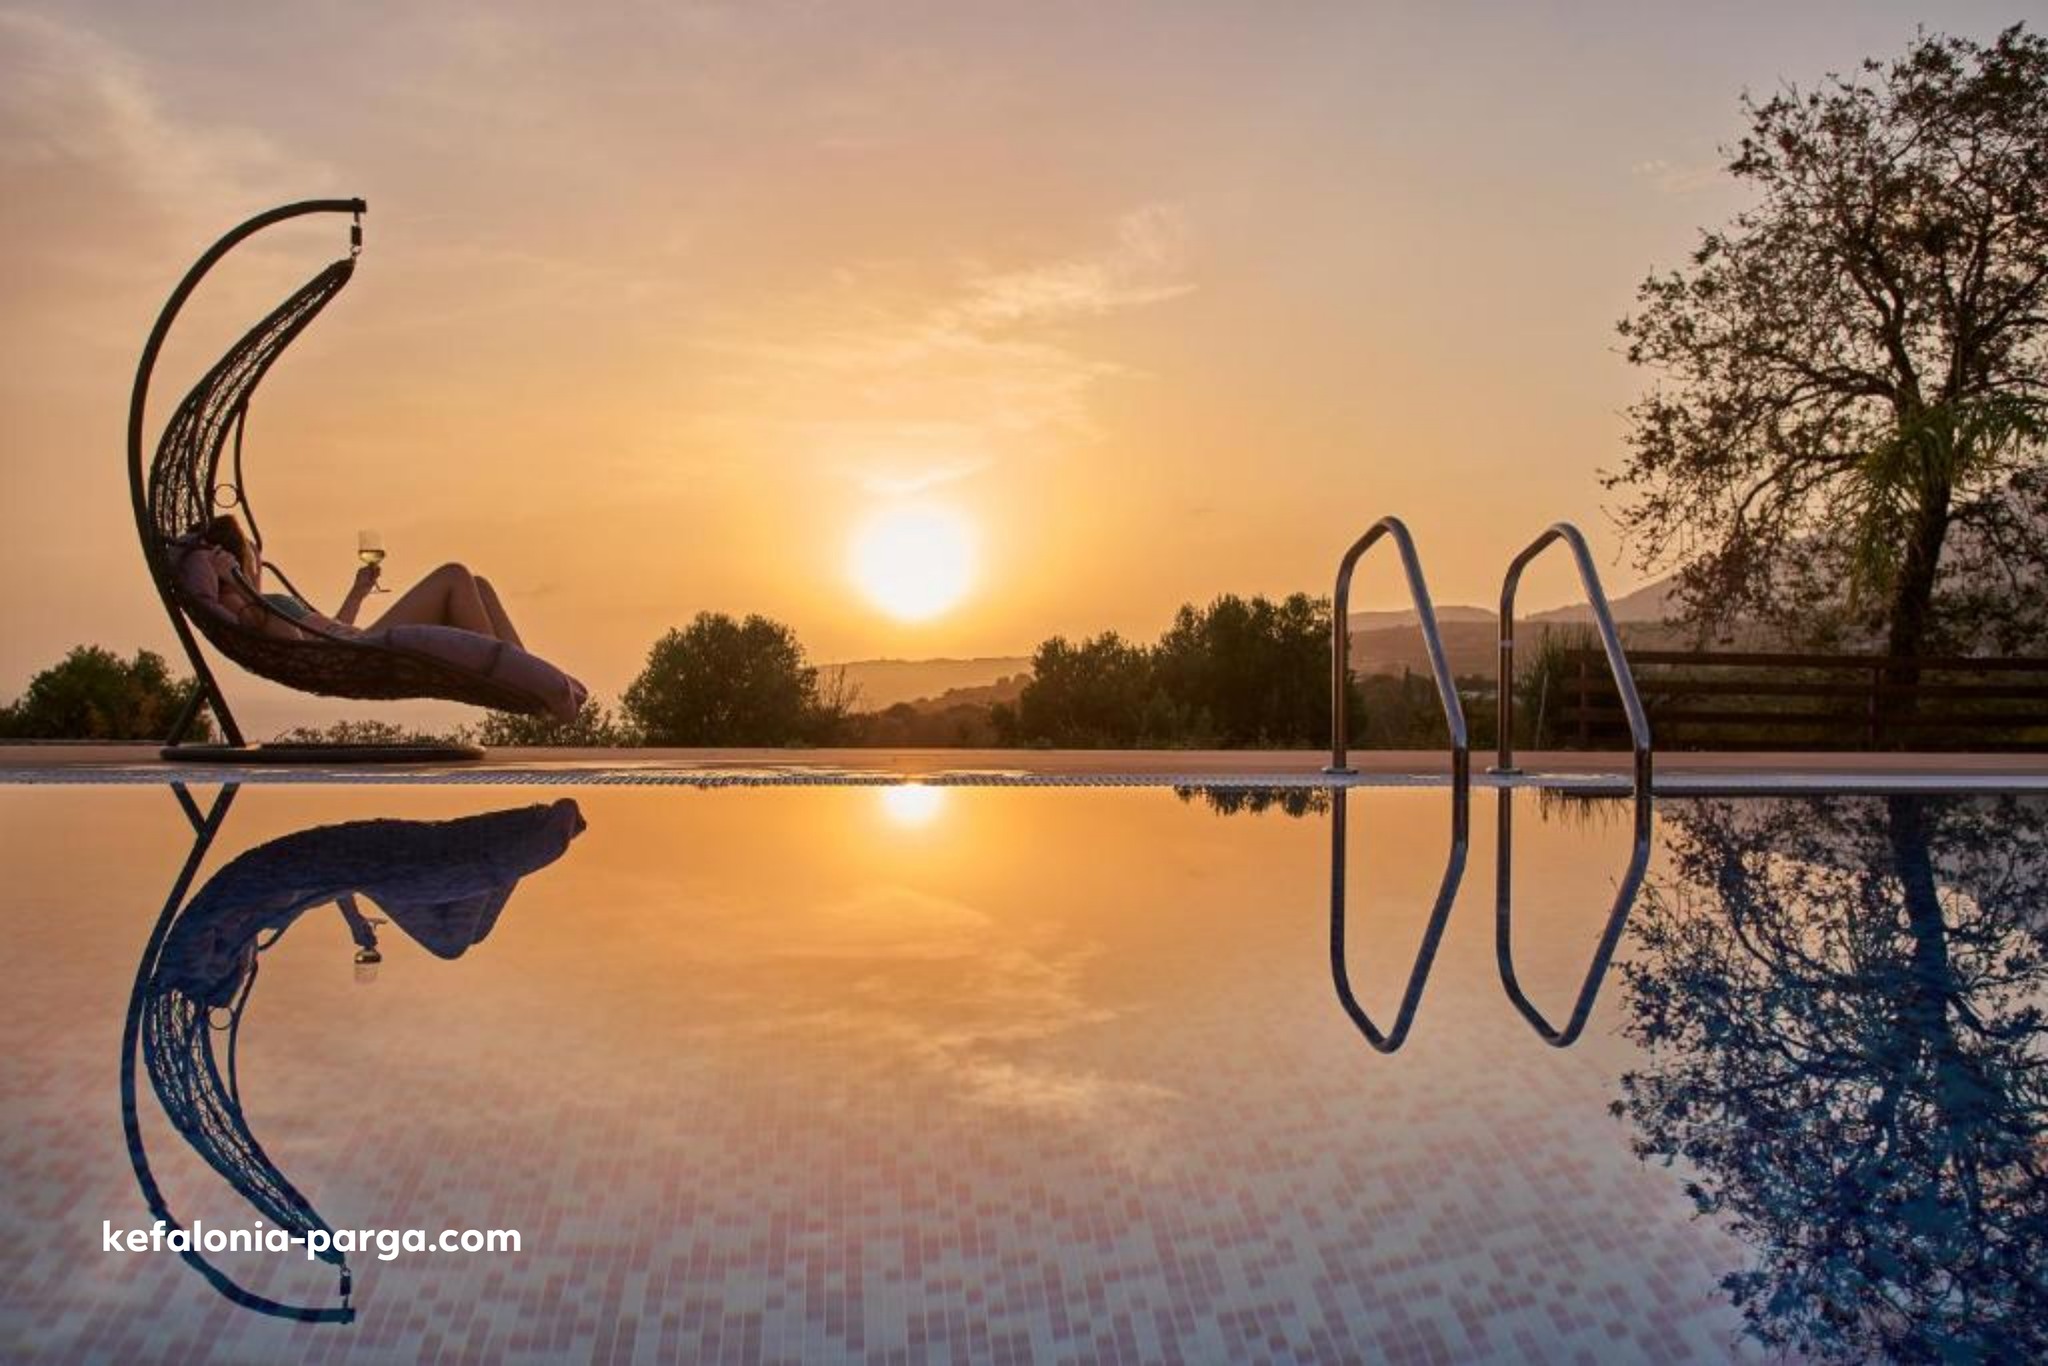 Kefalonia villas with pool: modern 2 bedroom villa with private pool by Skala, Kefalonia, Greece. Kefalonia holidays.